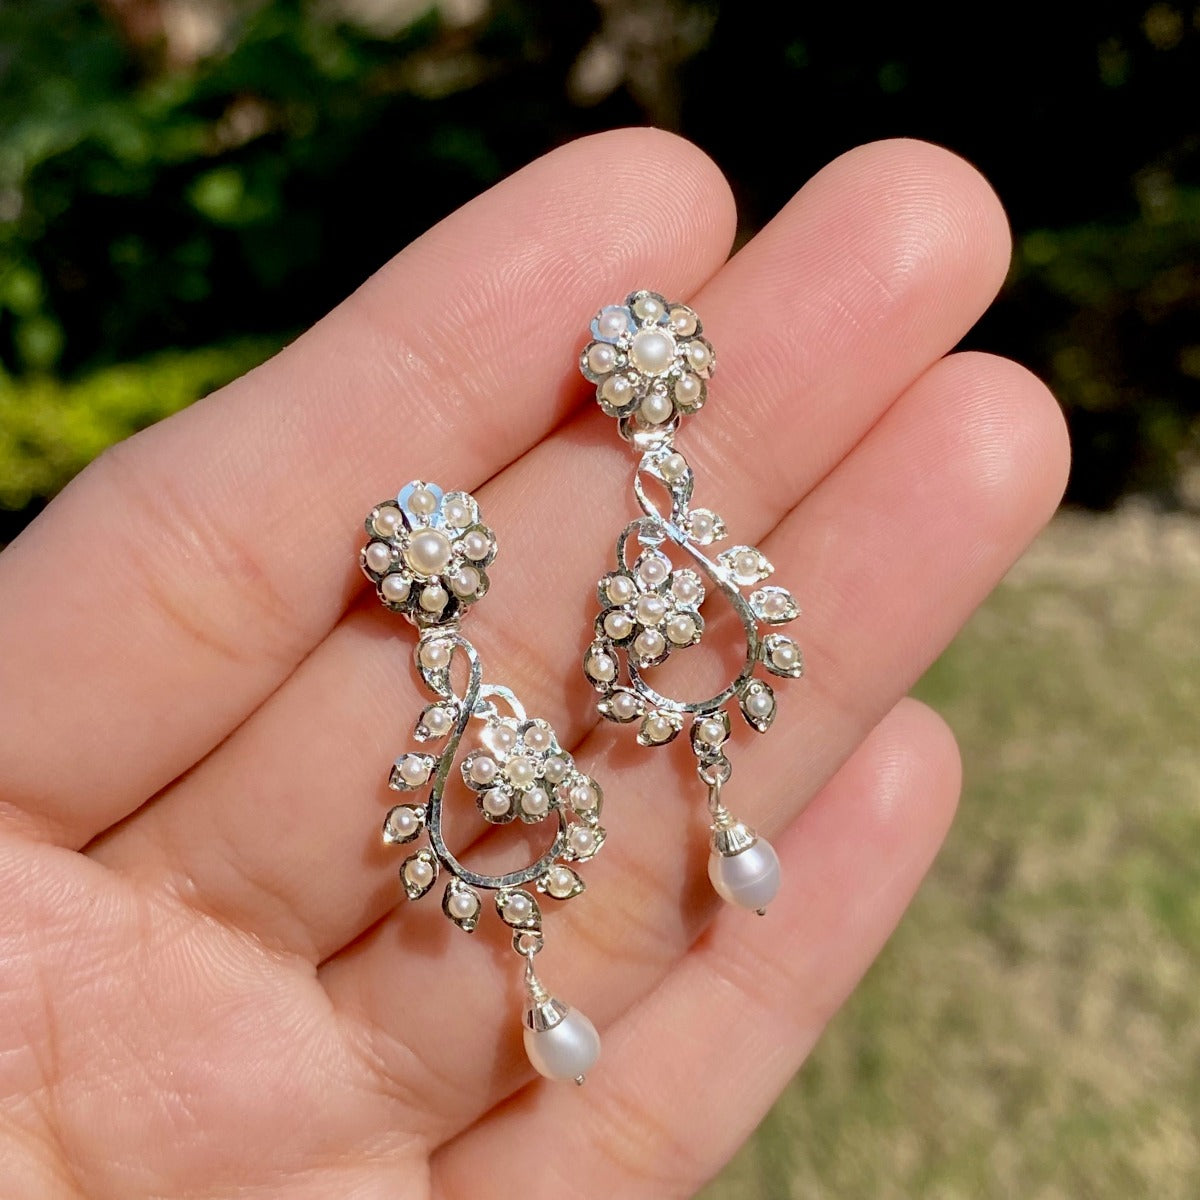 small bohemian pearl earrings on sterling silver